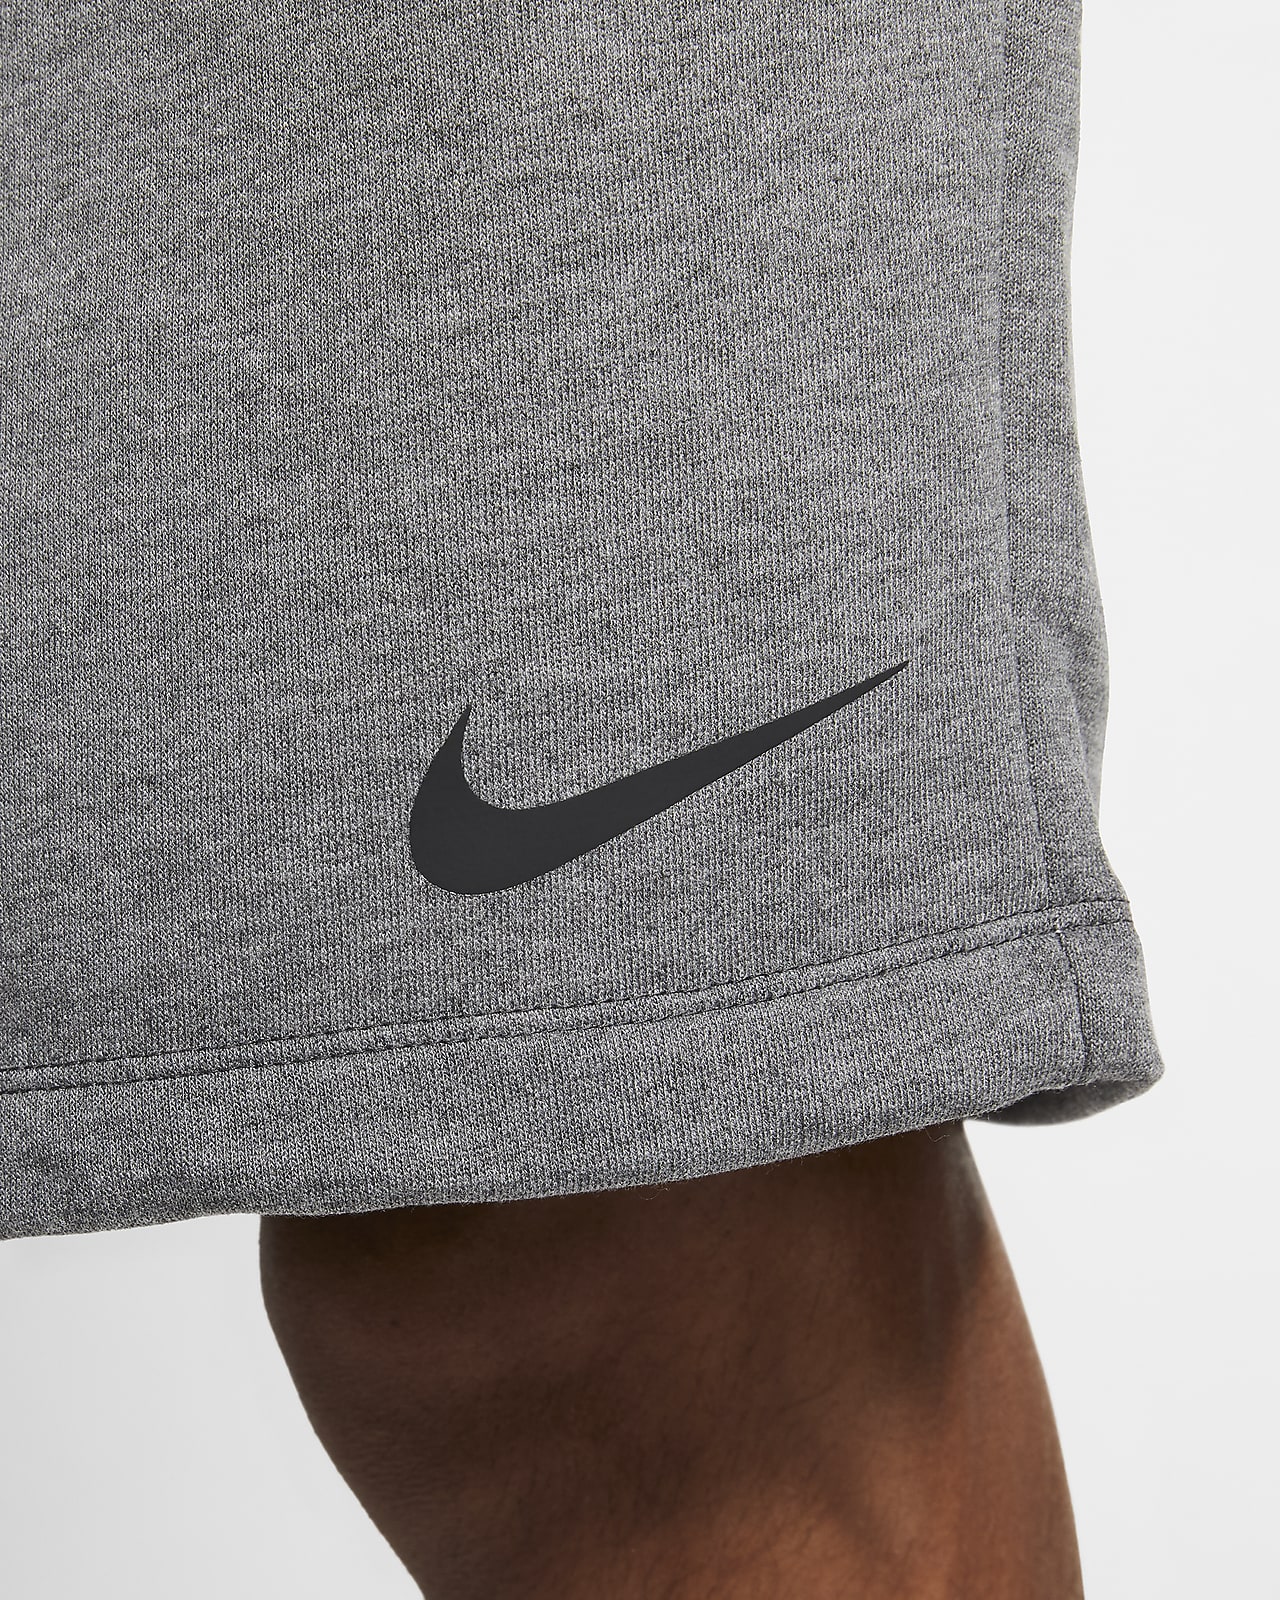 Nike Dri-FIT Men's Fleece Training Shorts. Nike AU